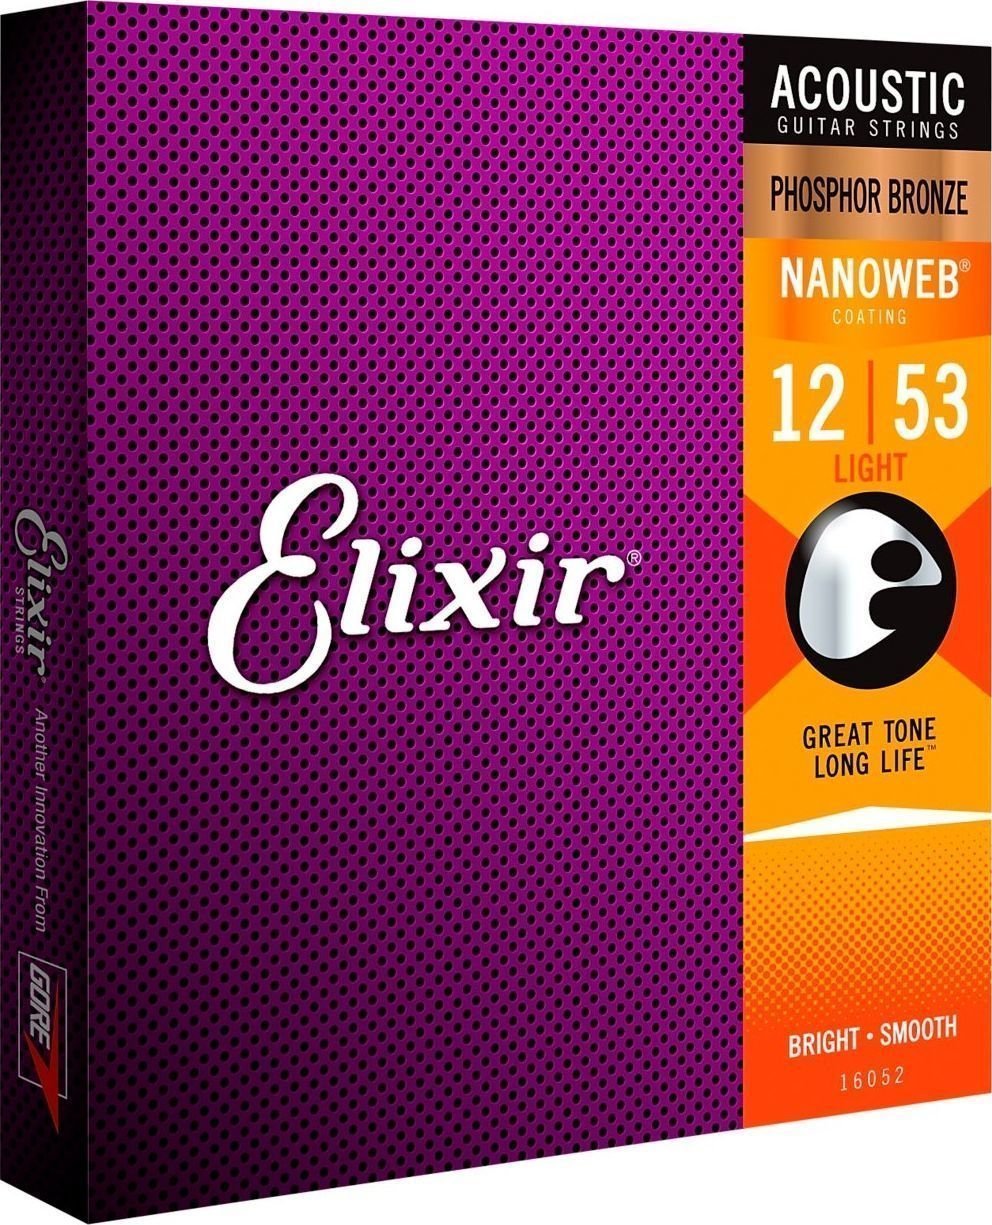 Žice za akustičnu gitaru Elixir 16052 Nanoweb 12-53